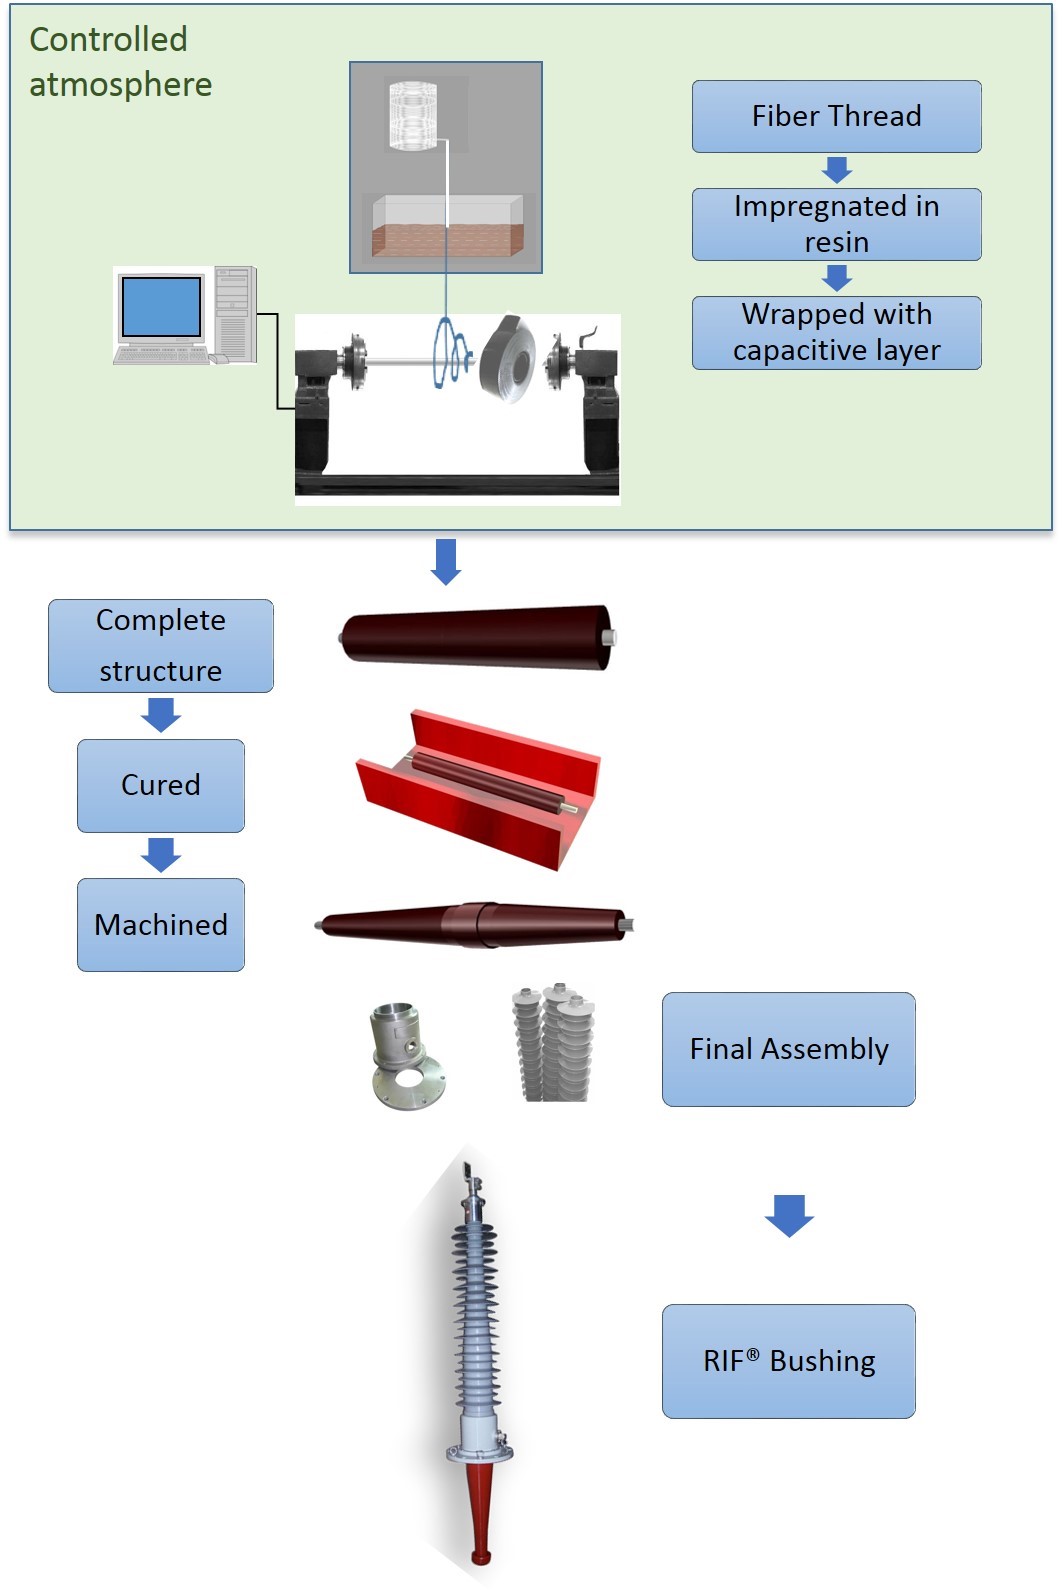 Production process schematic for RHM RIF insulation transformer bushings by RHM International